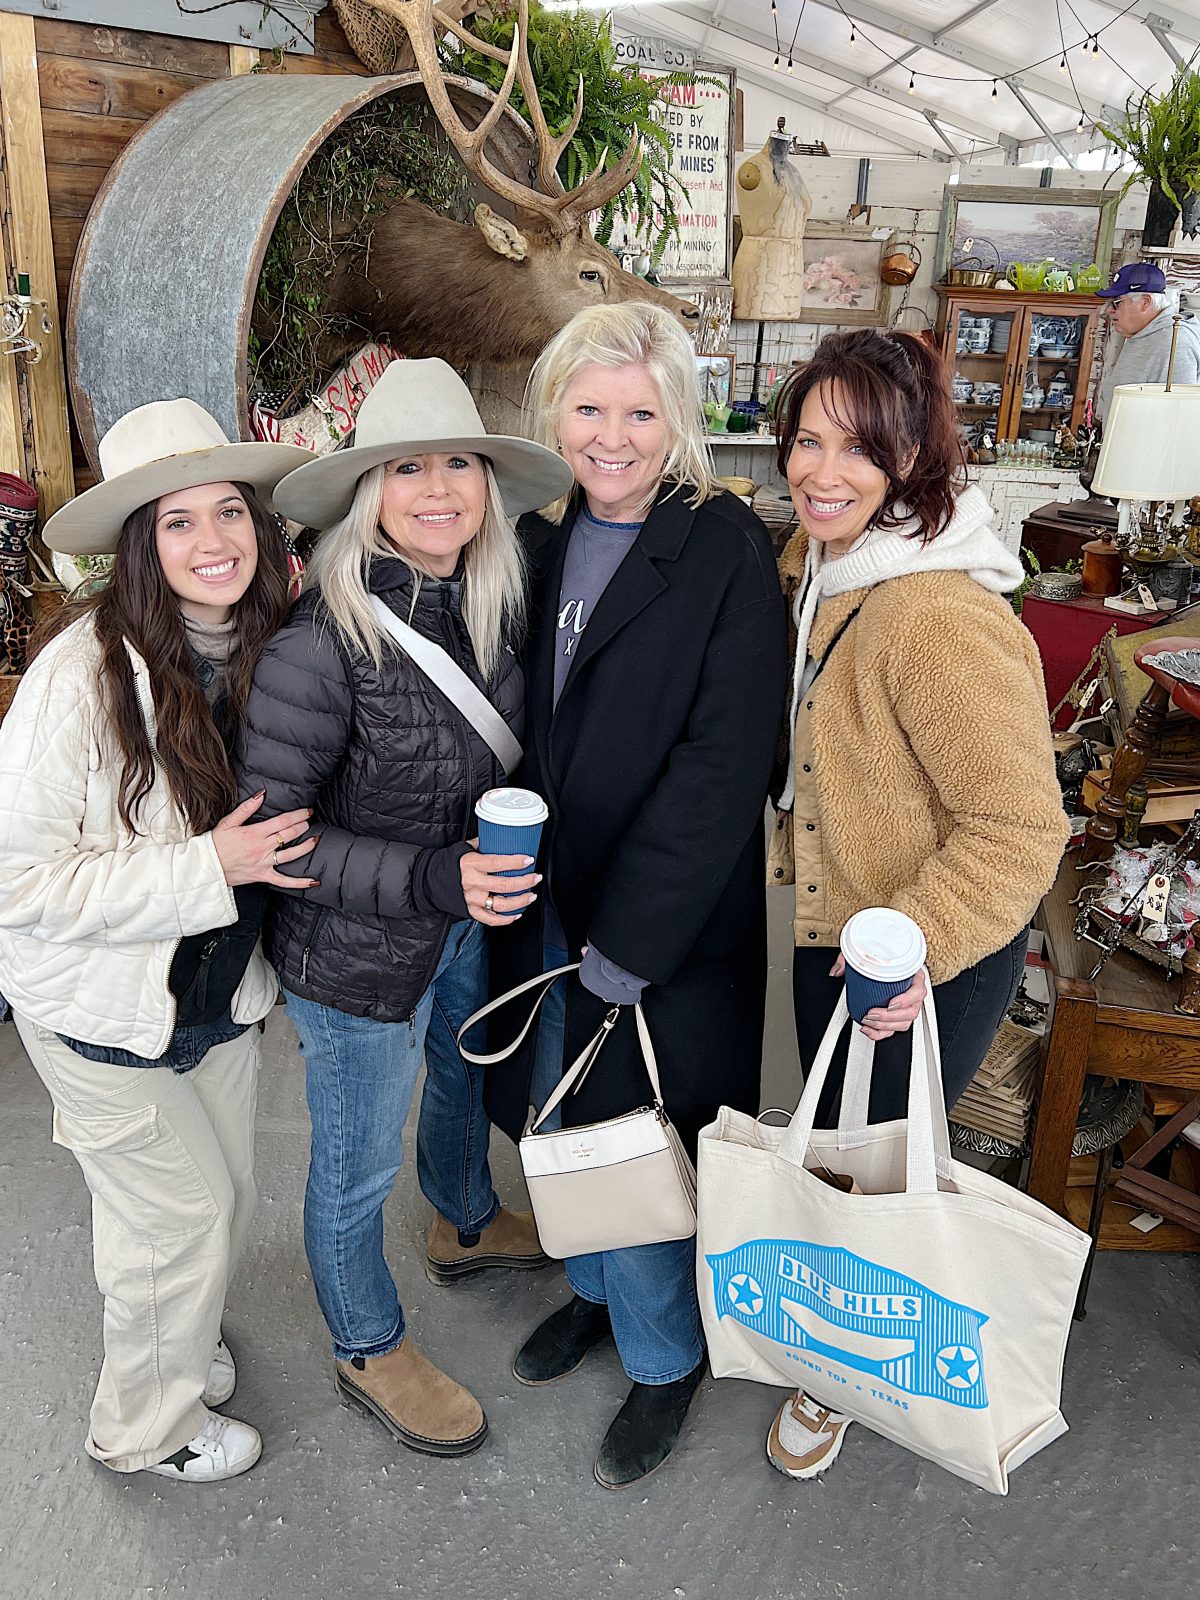 Natashia, Shauna, Debra, and Leslie in Round Top Texas shopping for vintage items.